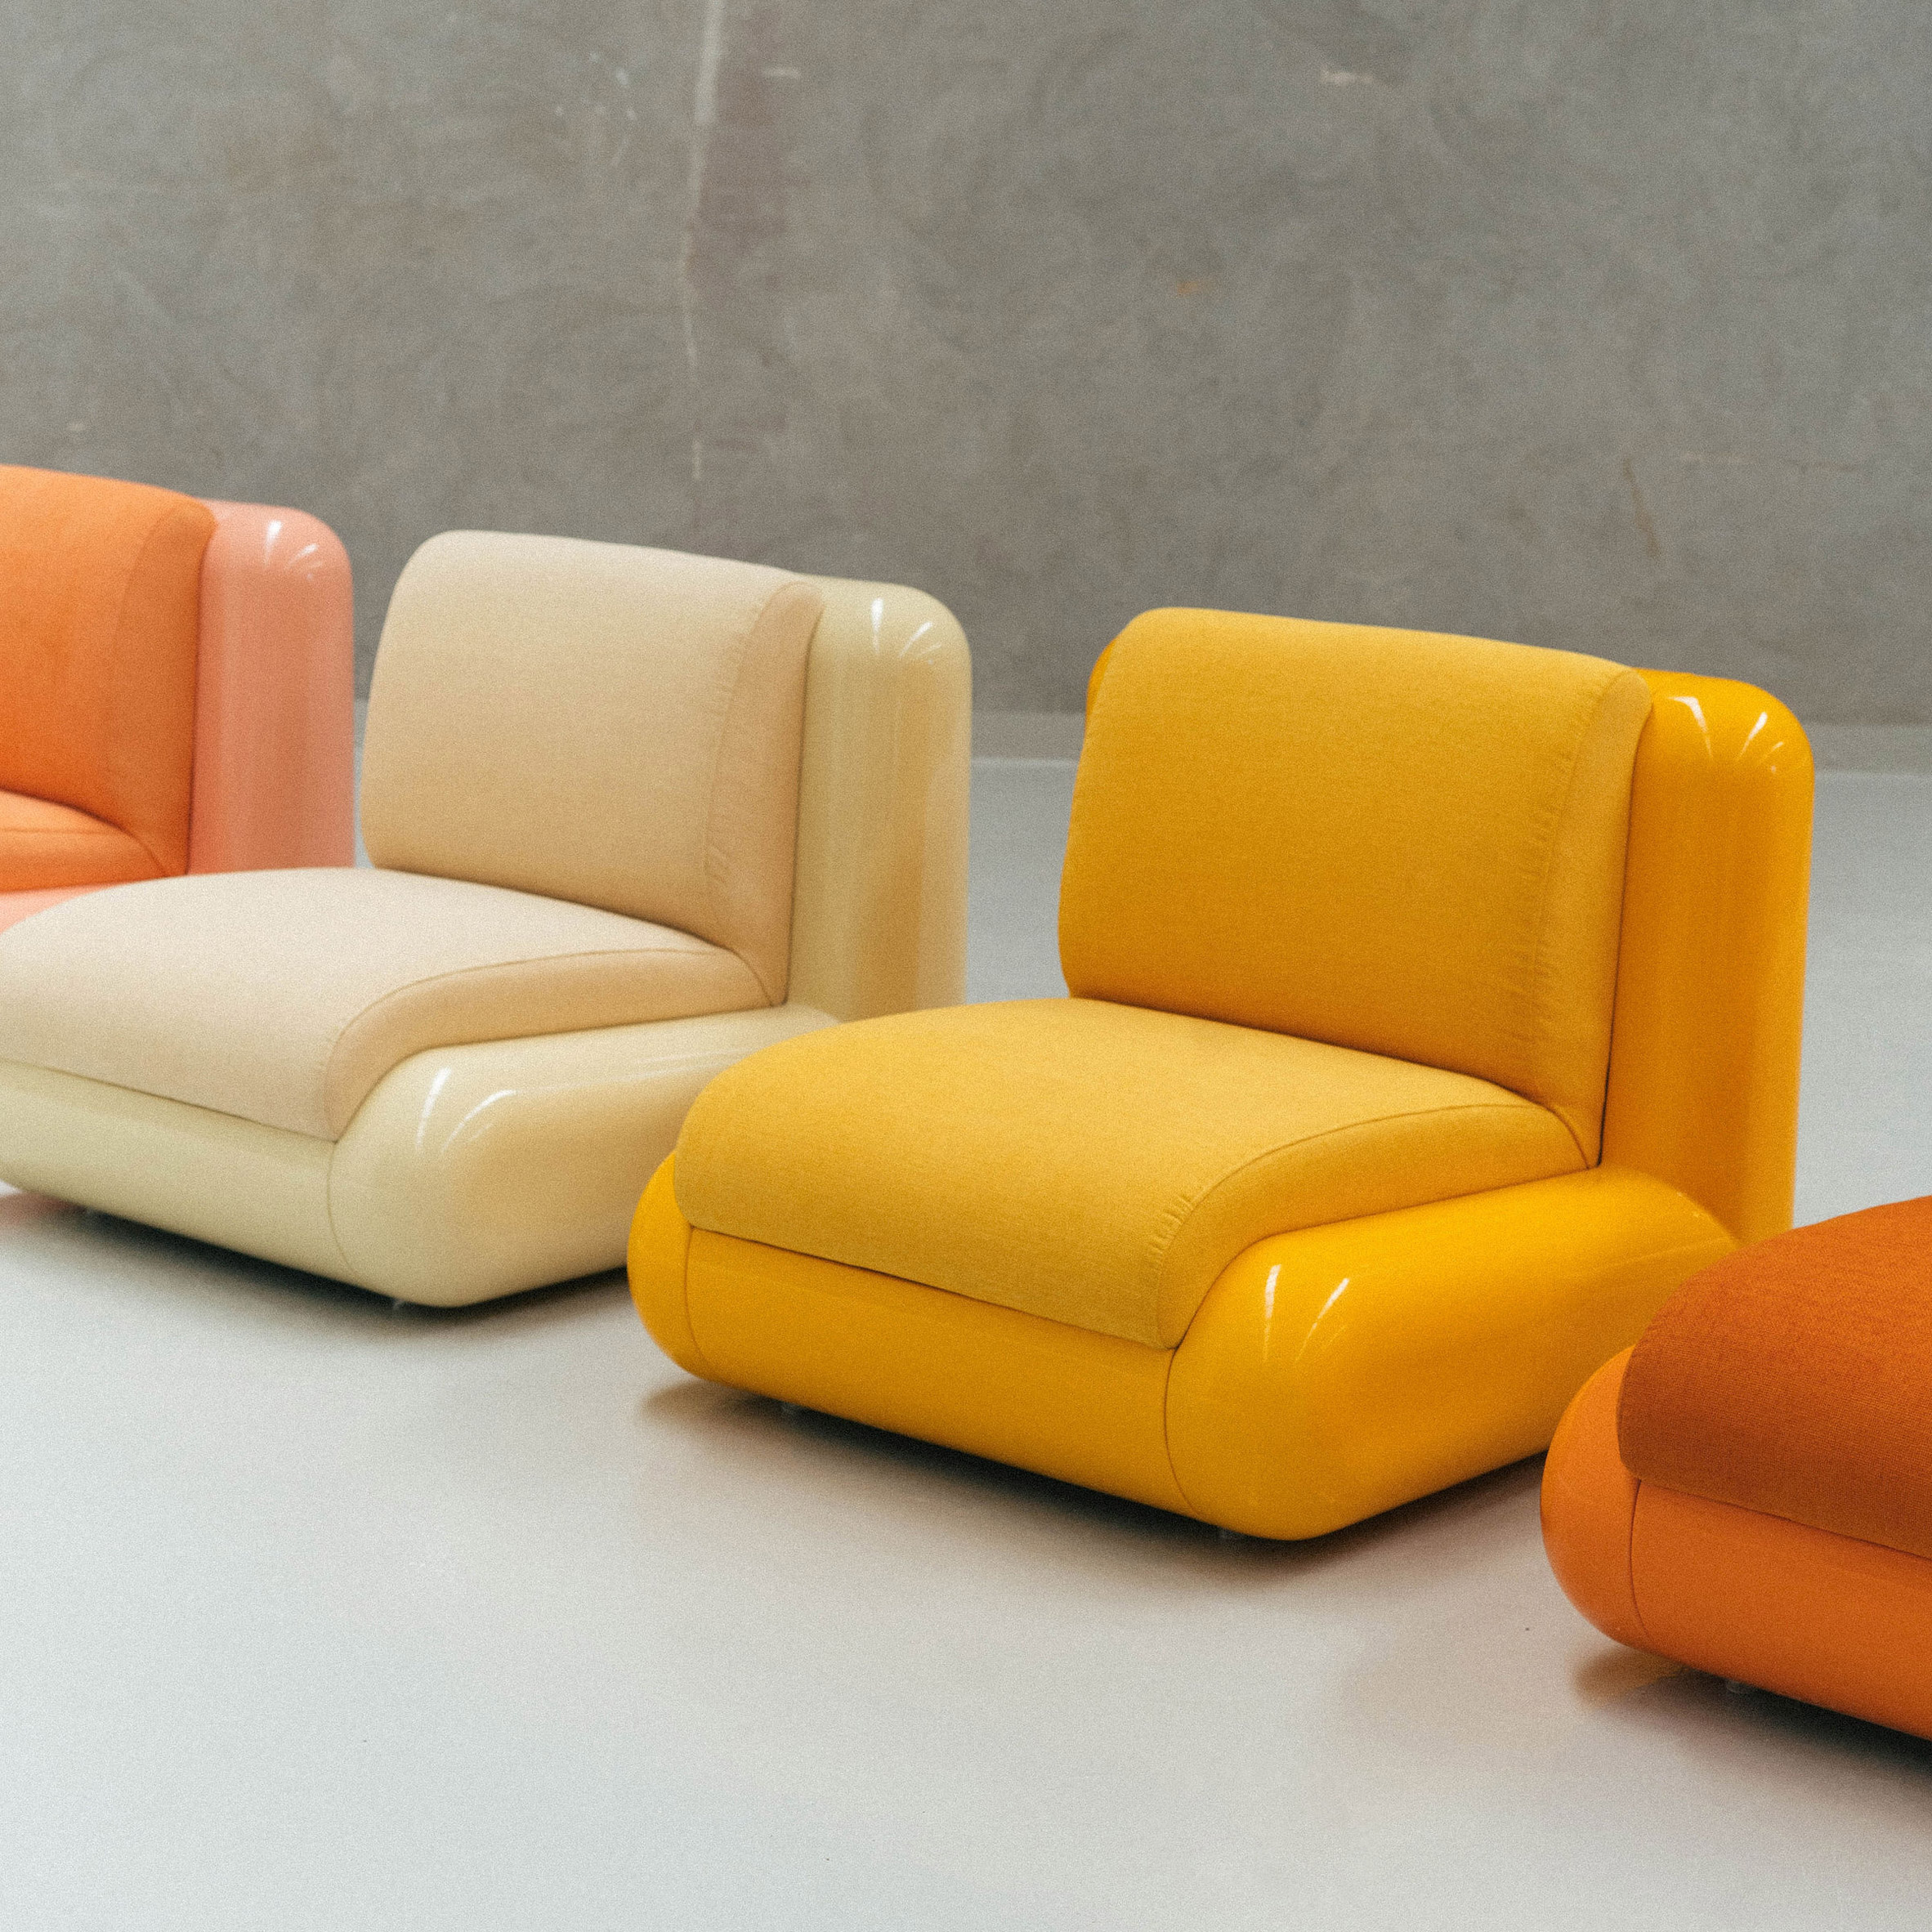 Orange and cream seats by Holloway Li